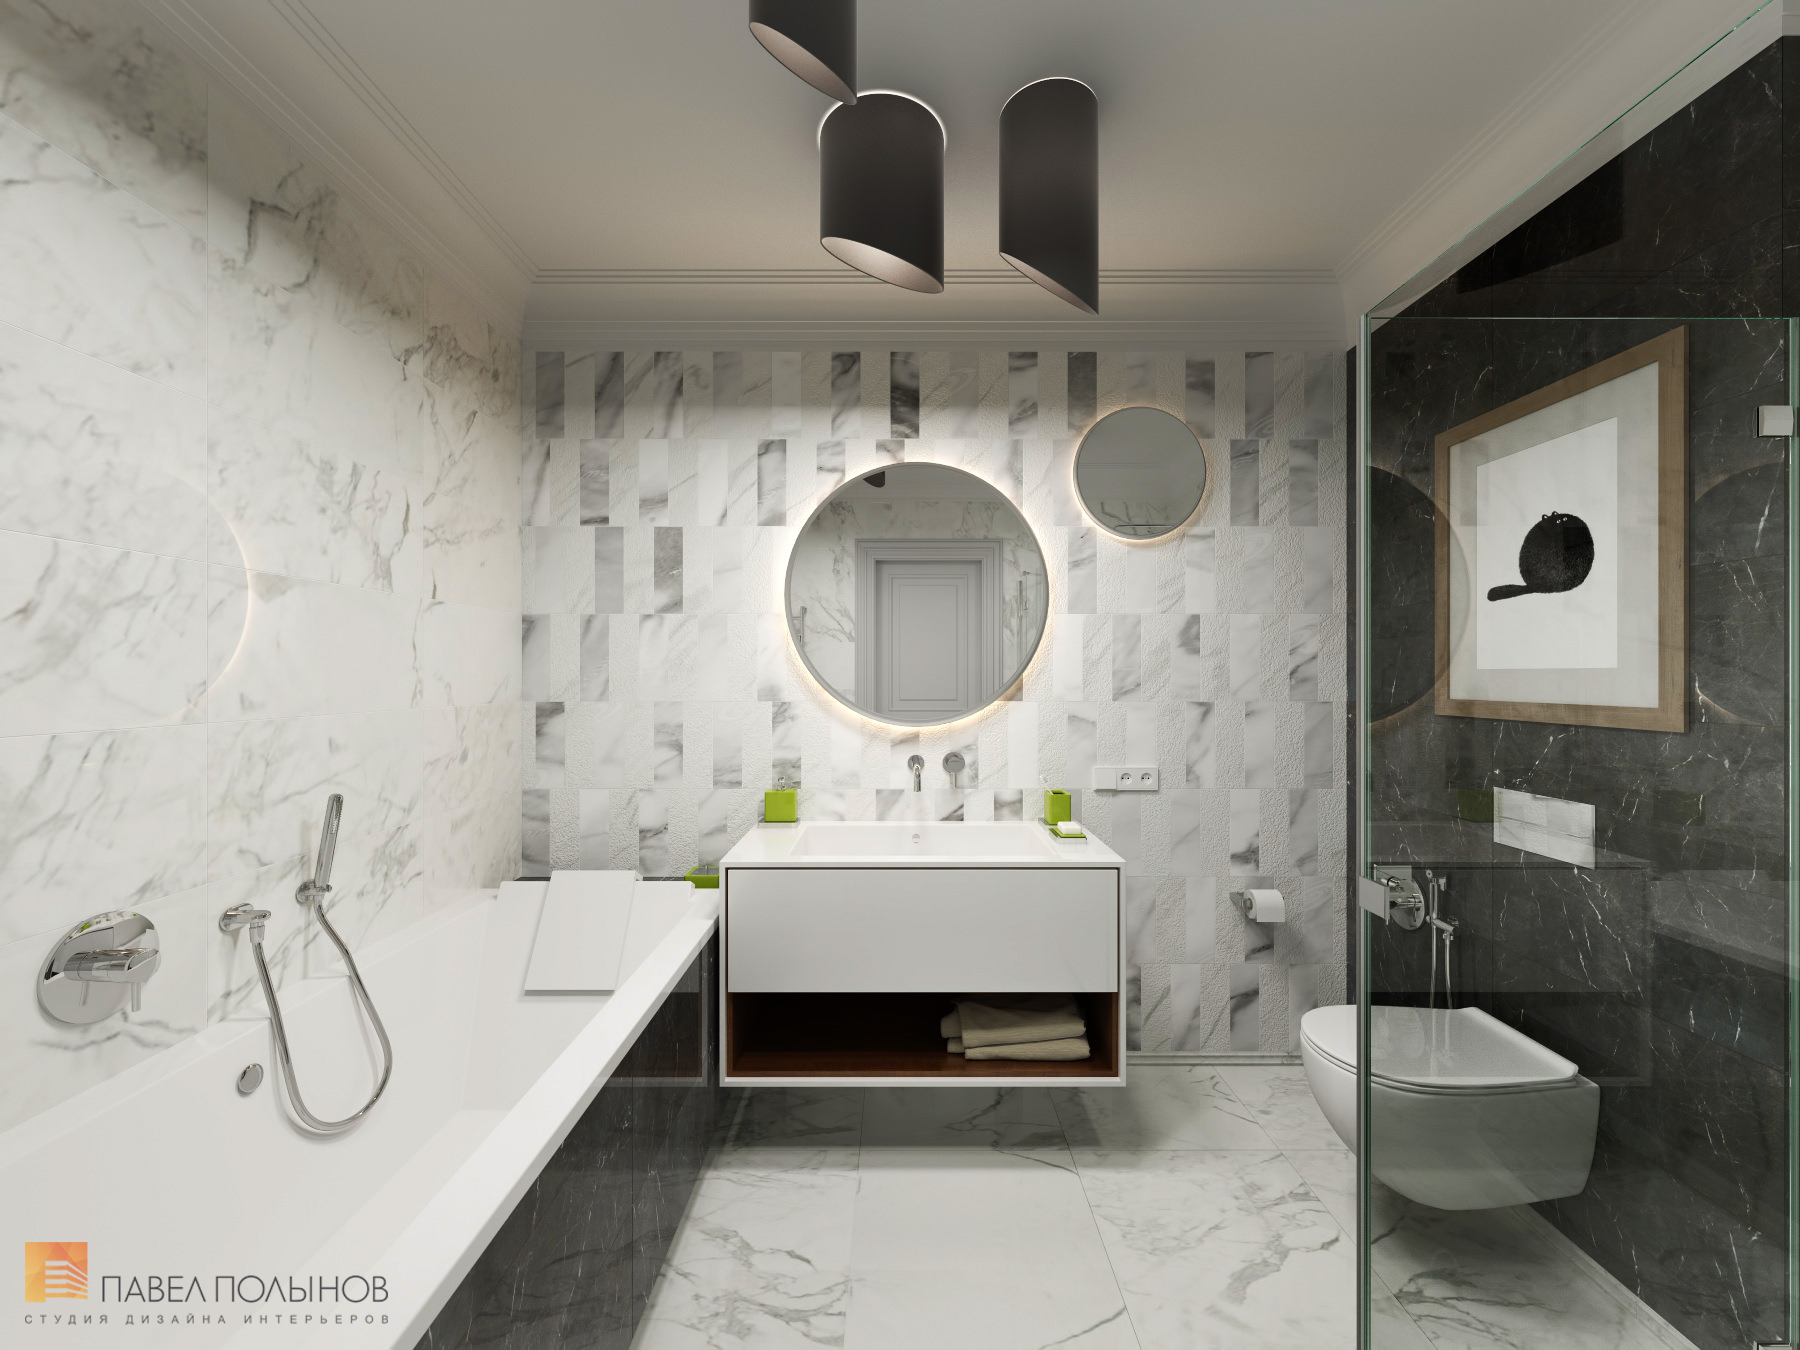 Фото интерьер ванной комнаты из проекта «Интерьер квартиры в стиле неоклассики, ЖК «Парадный квартал», 190 кв.м.»